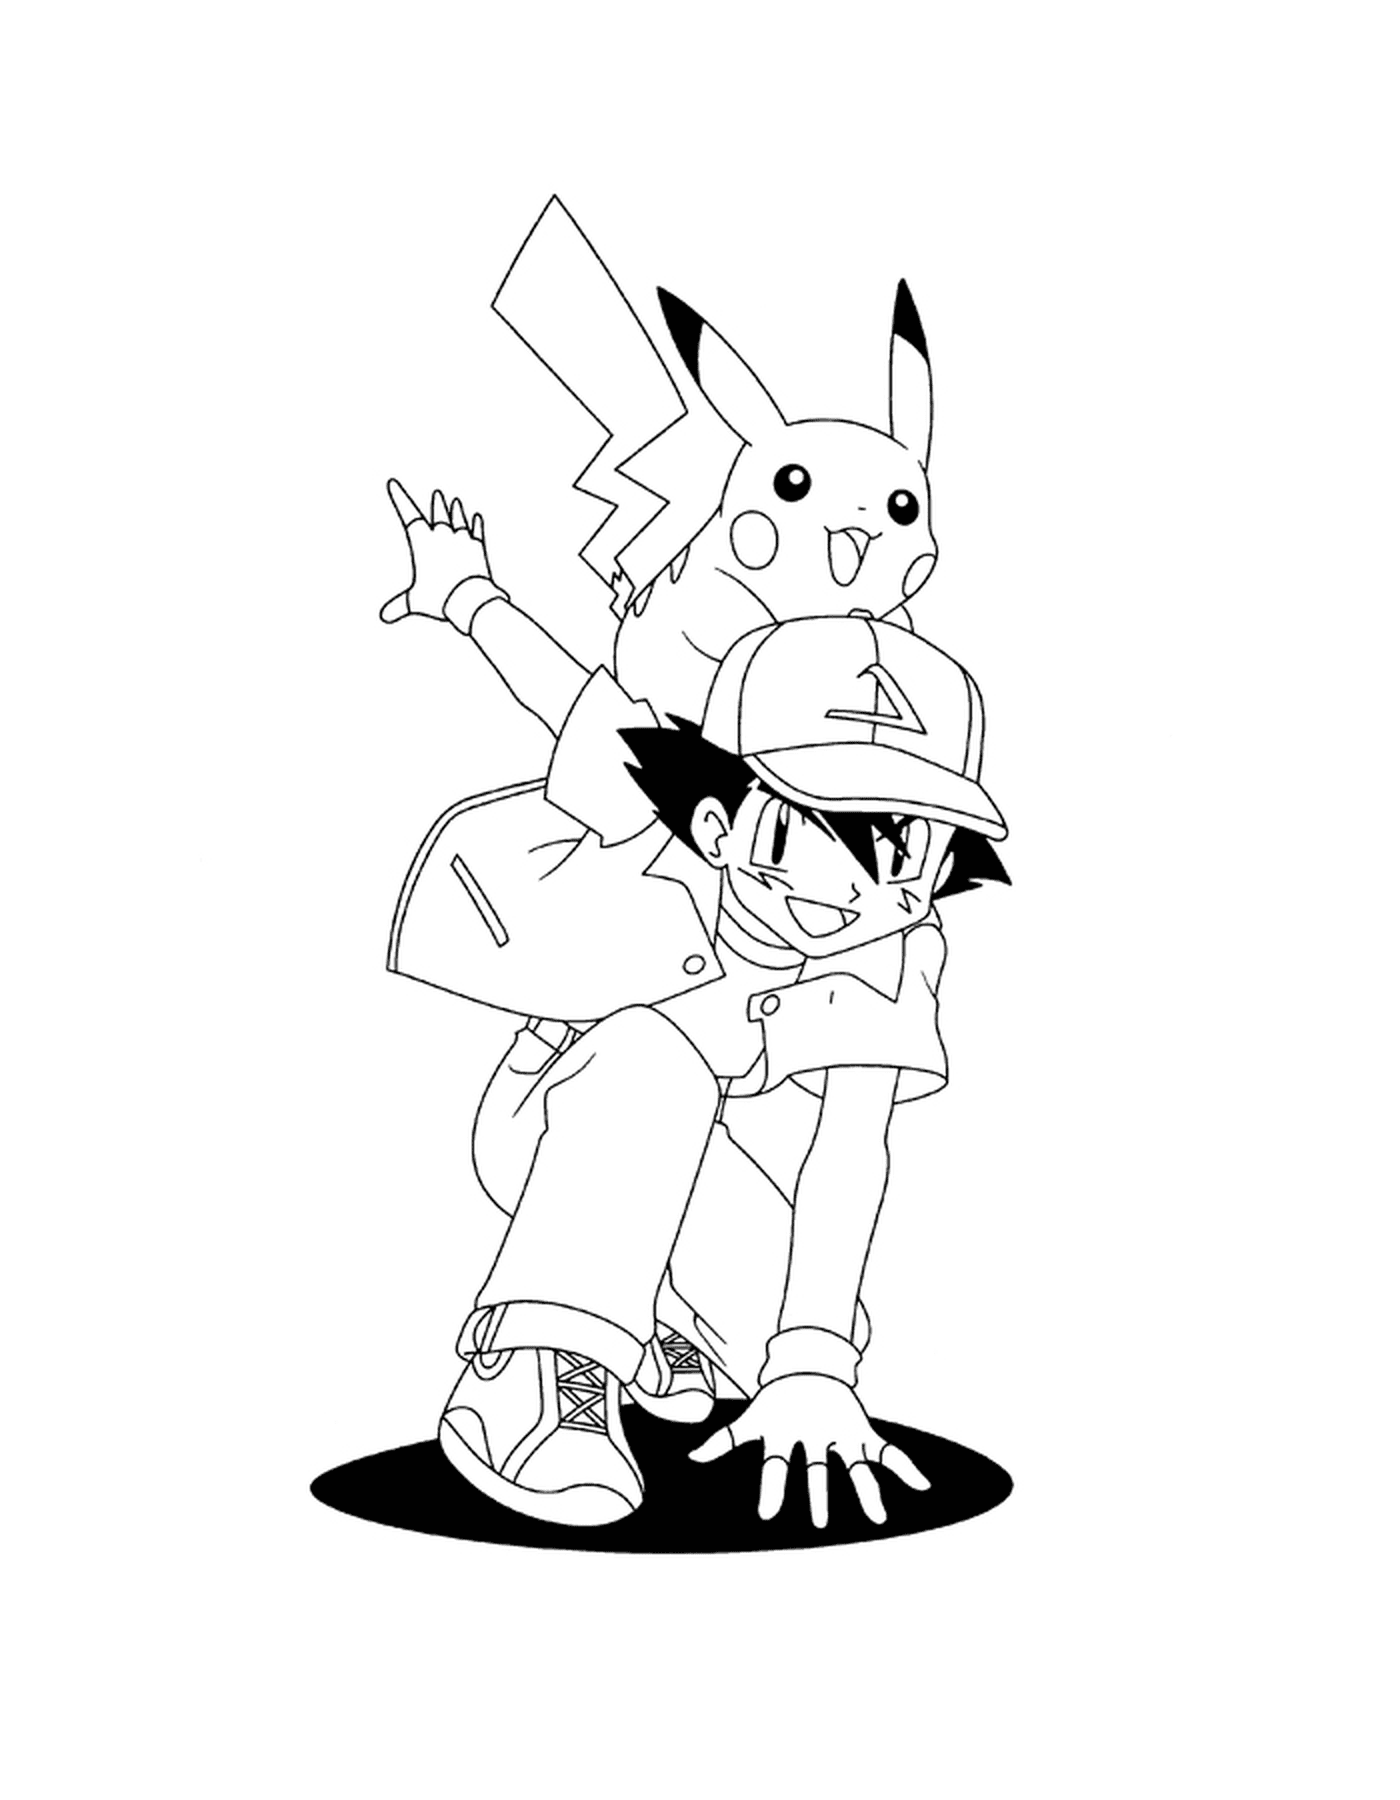  Sacha carrying Pikachu on her back 